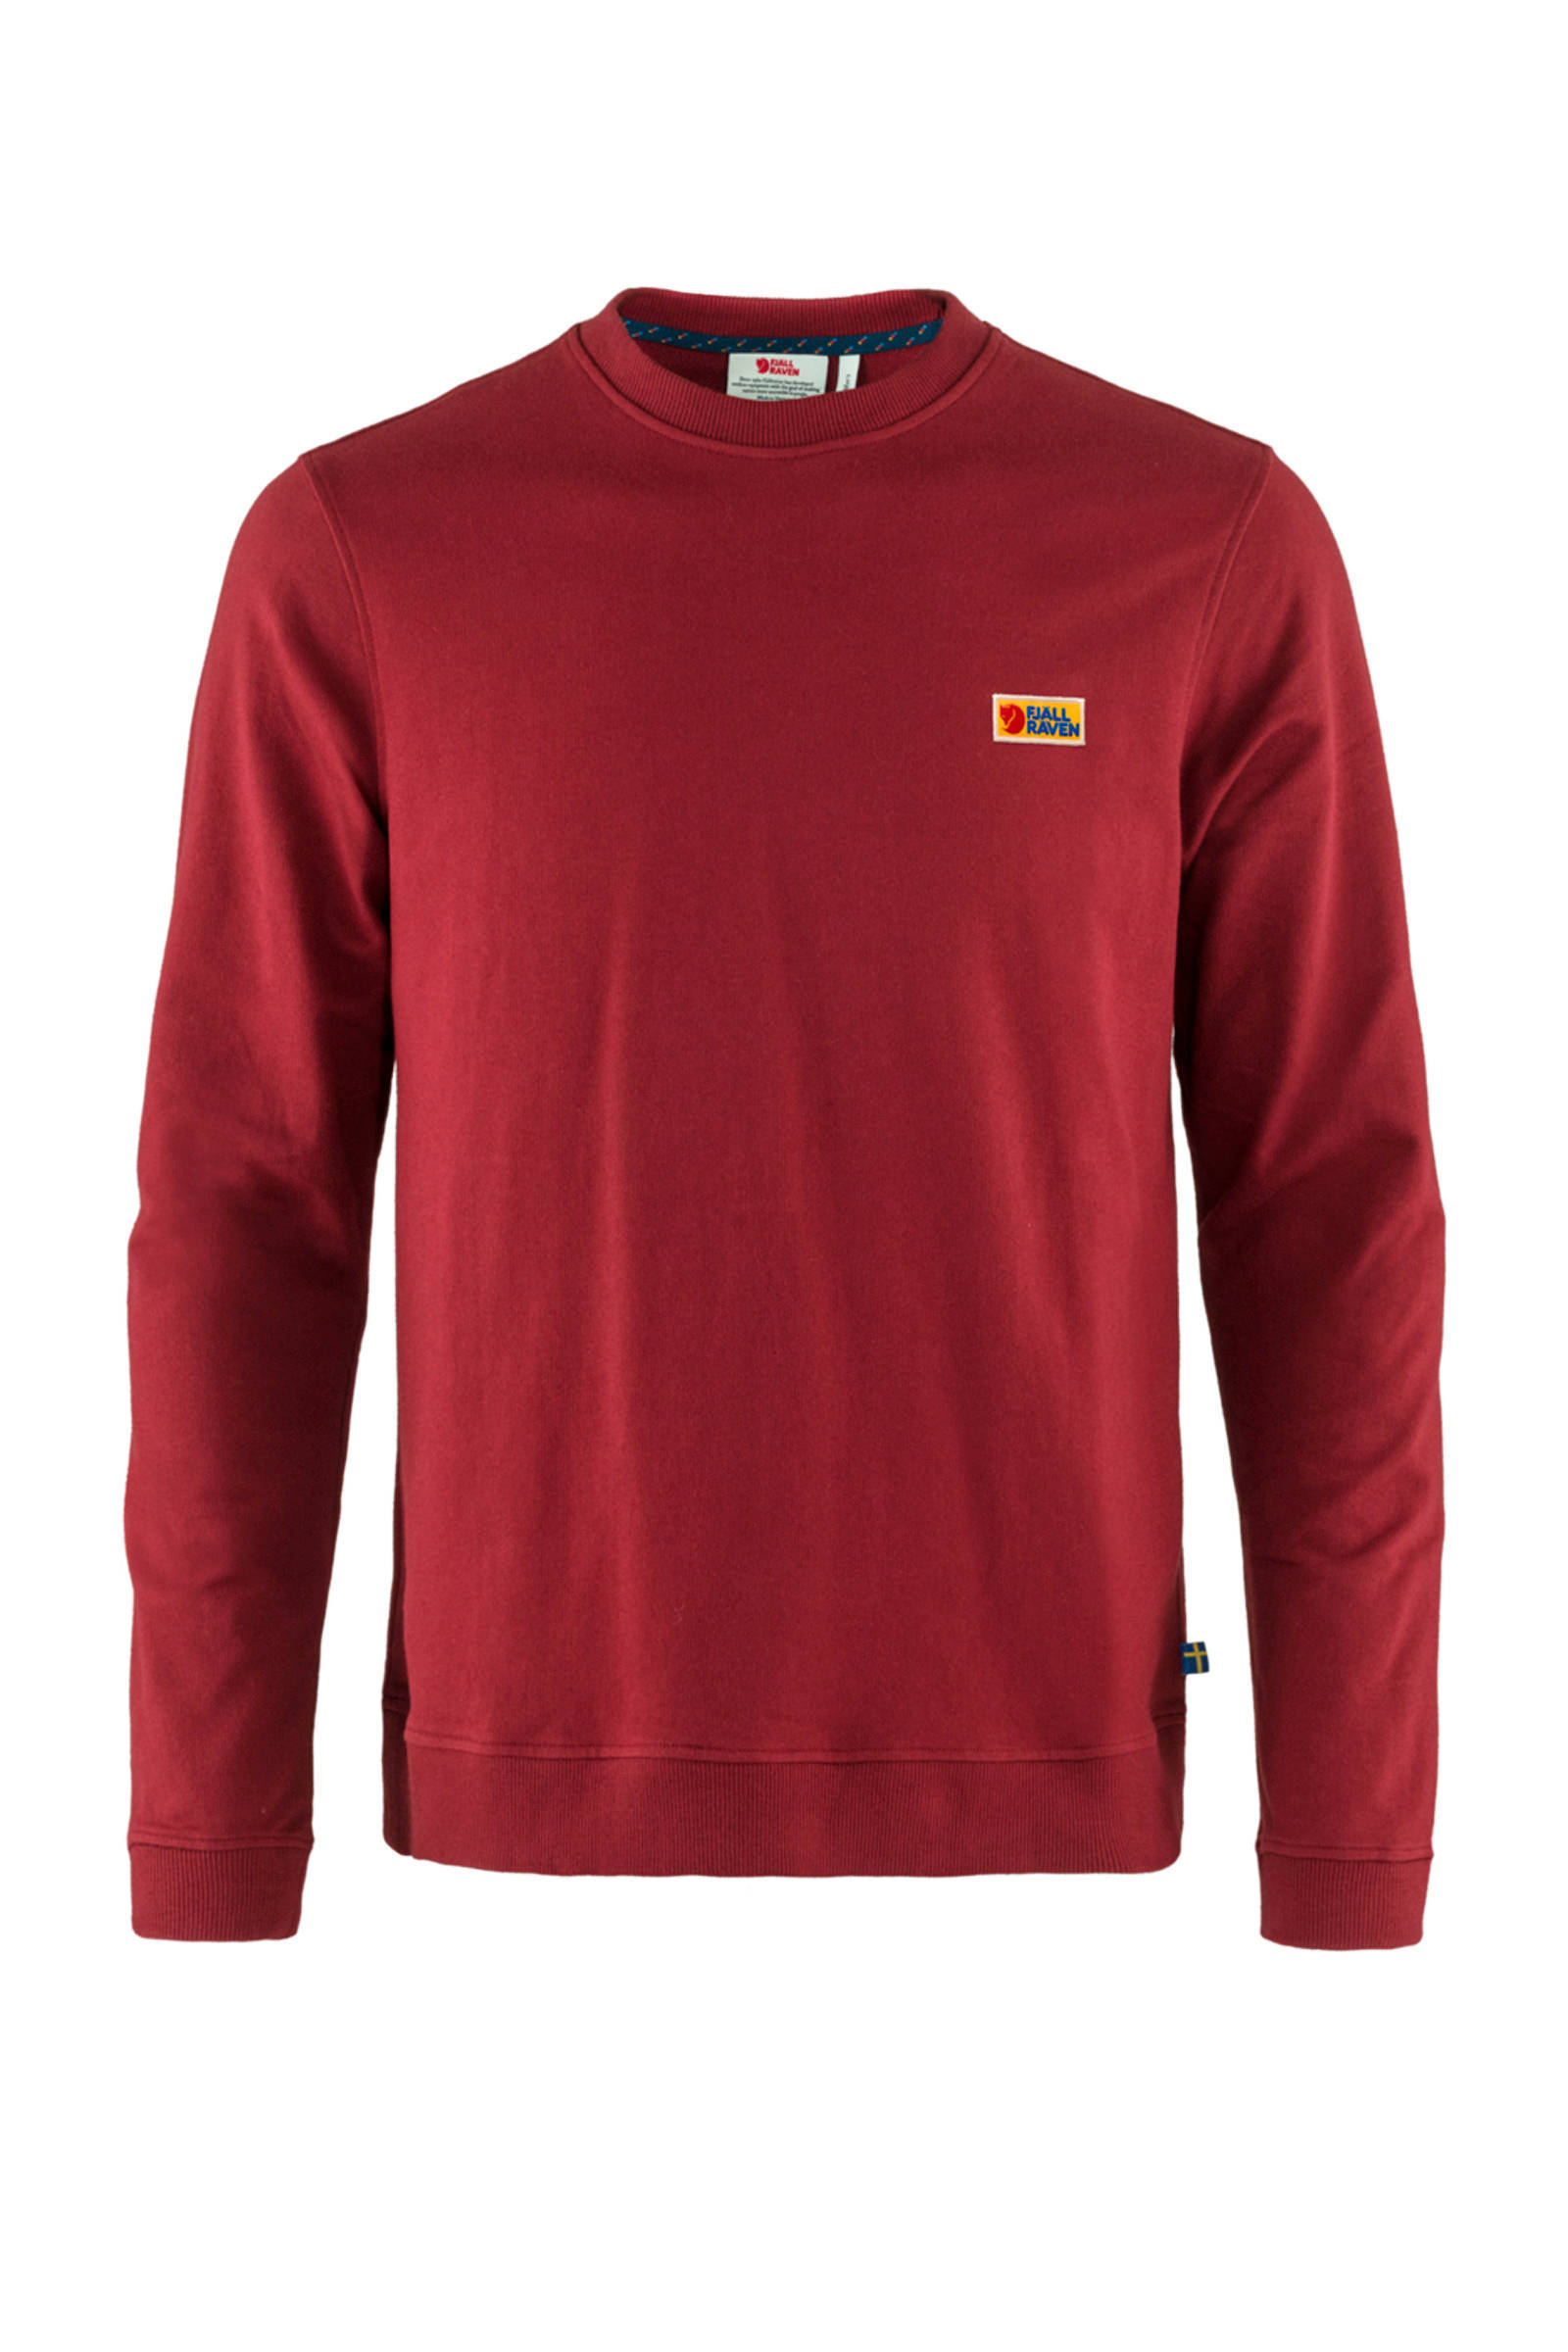 Fj&#xE4, llr&#xE4, ven Vardag Sweater Trui Donkerrood online kopen